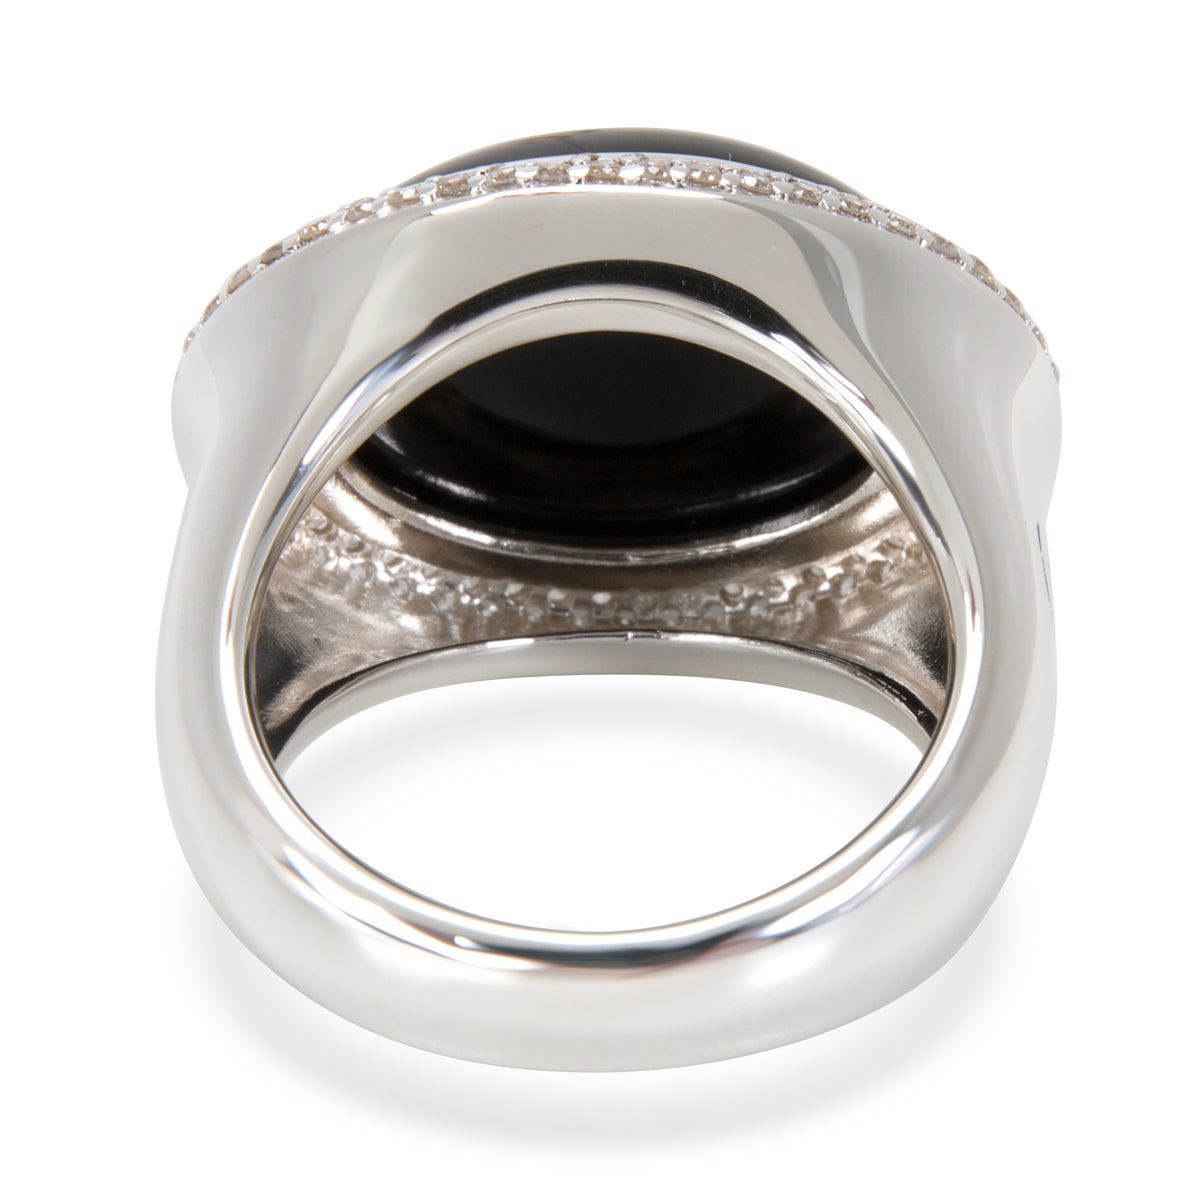 David Yurman Signature Oval Onyx & Diamond Ring in Sterling Silver